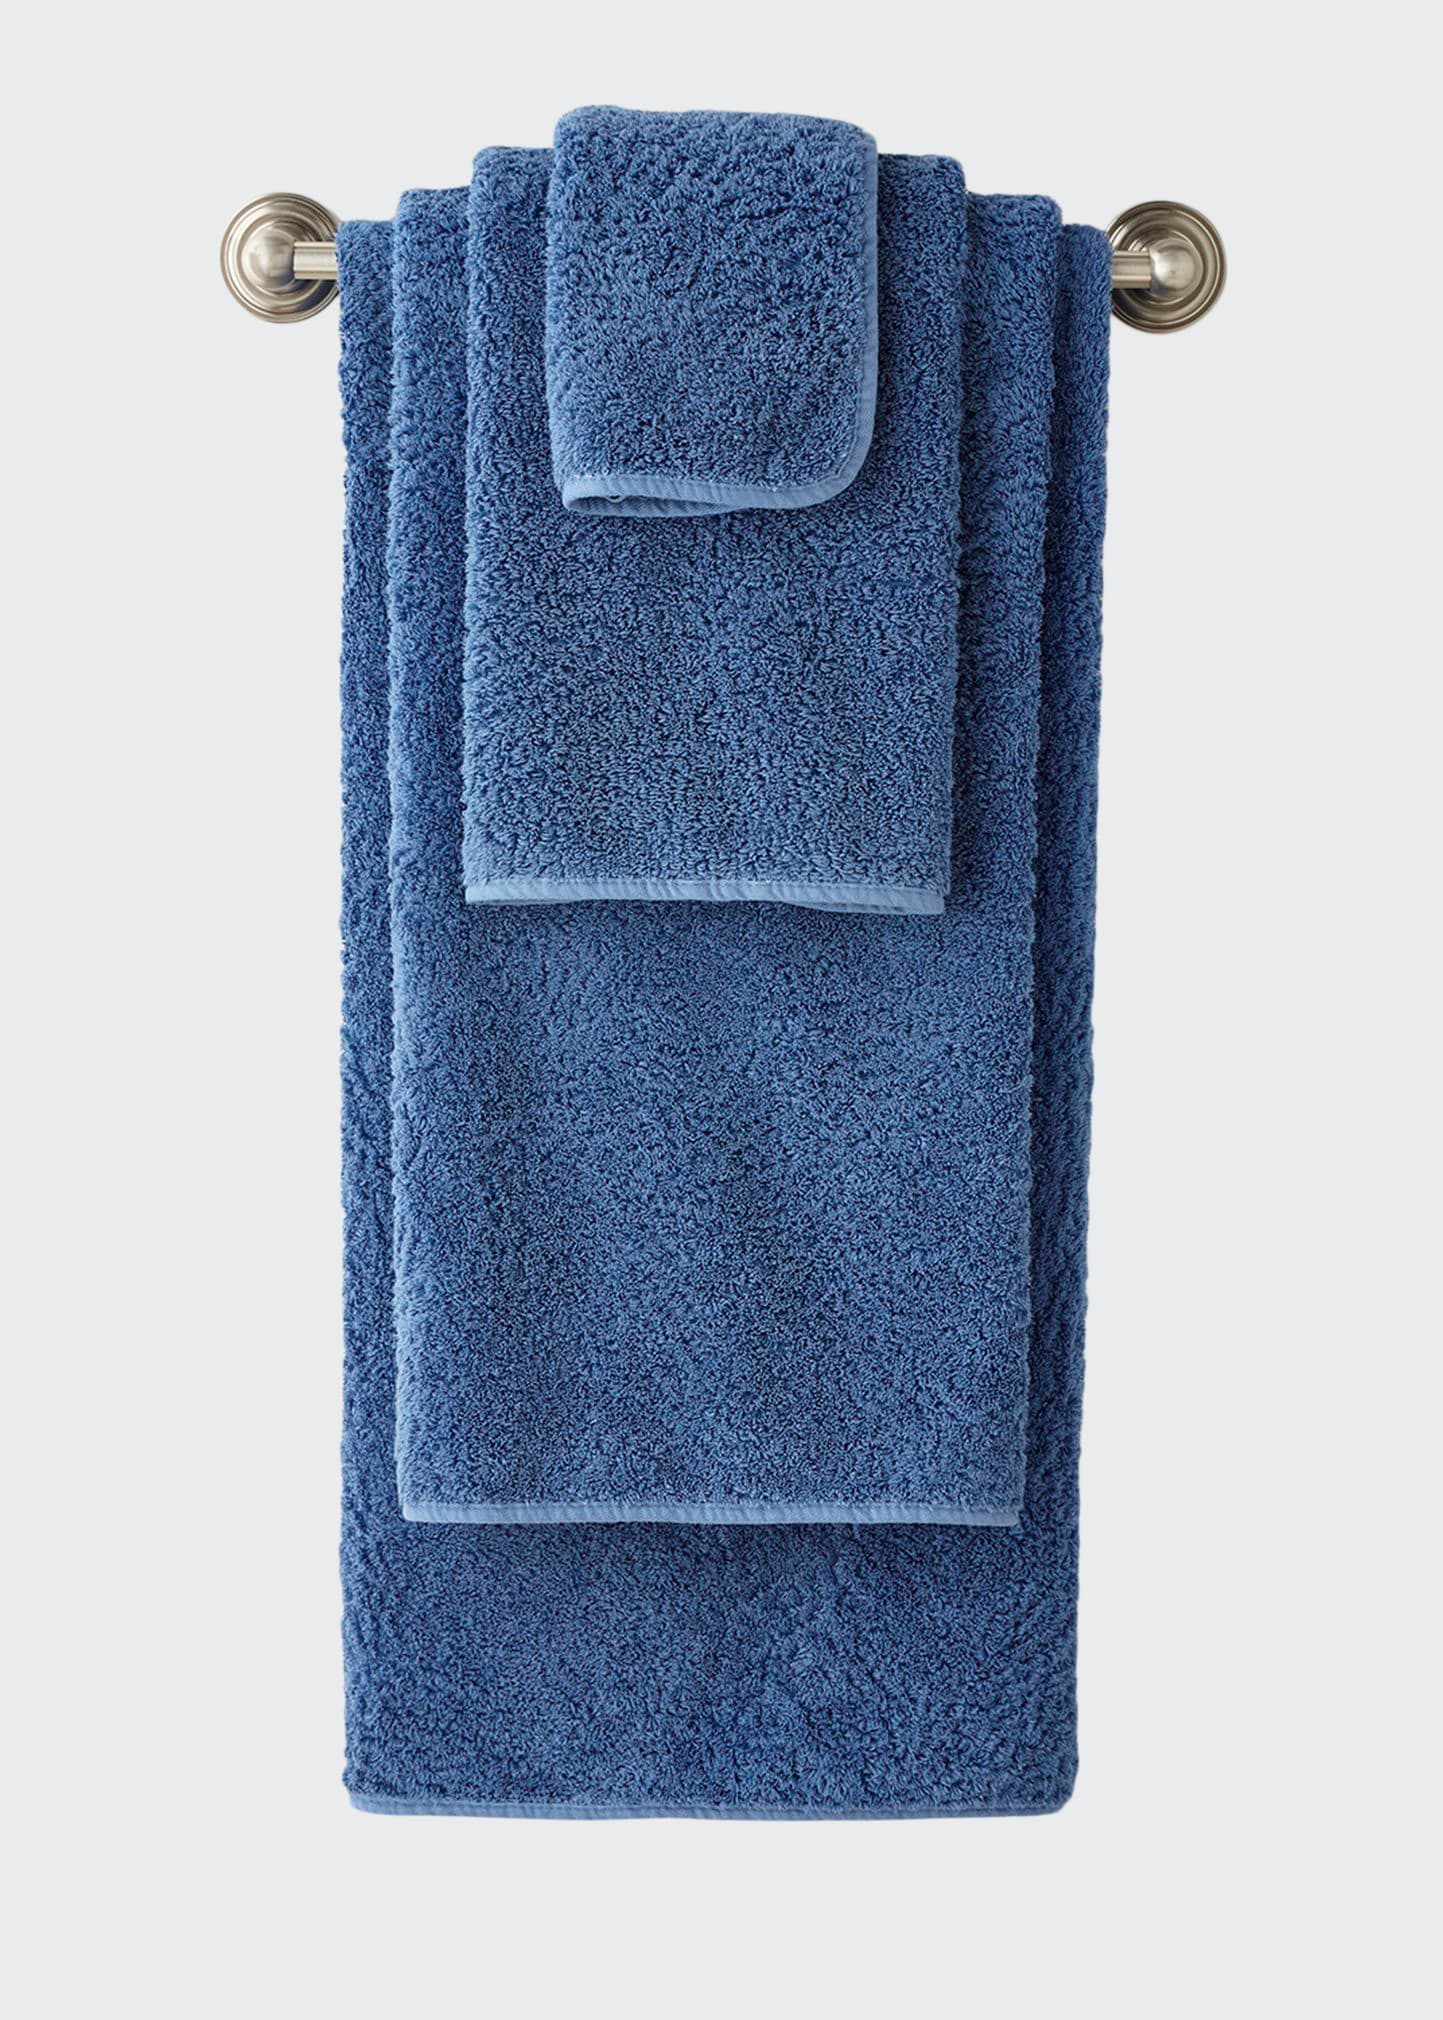 Graccioza Egoist Hand Towel